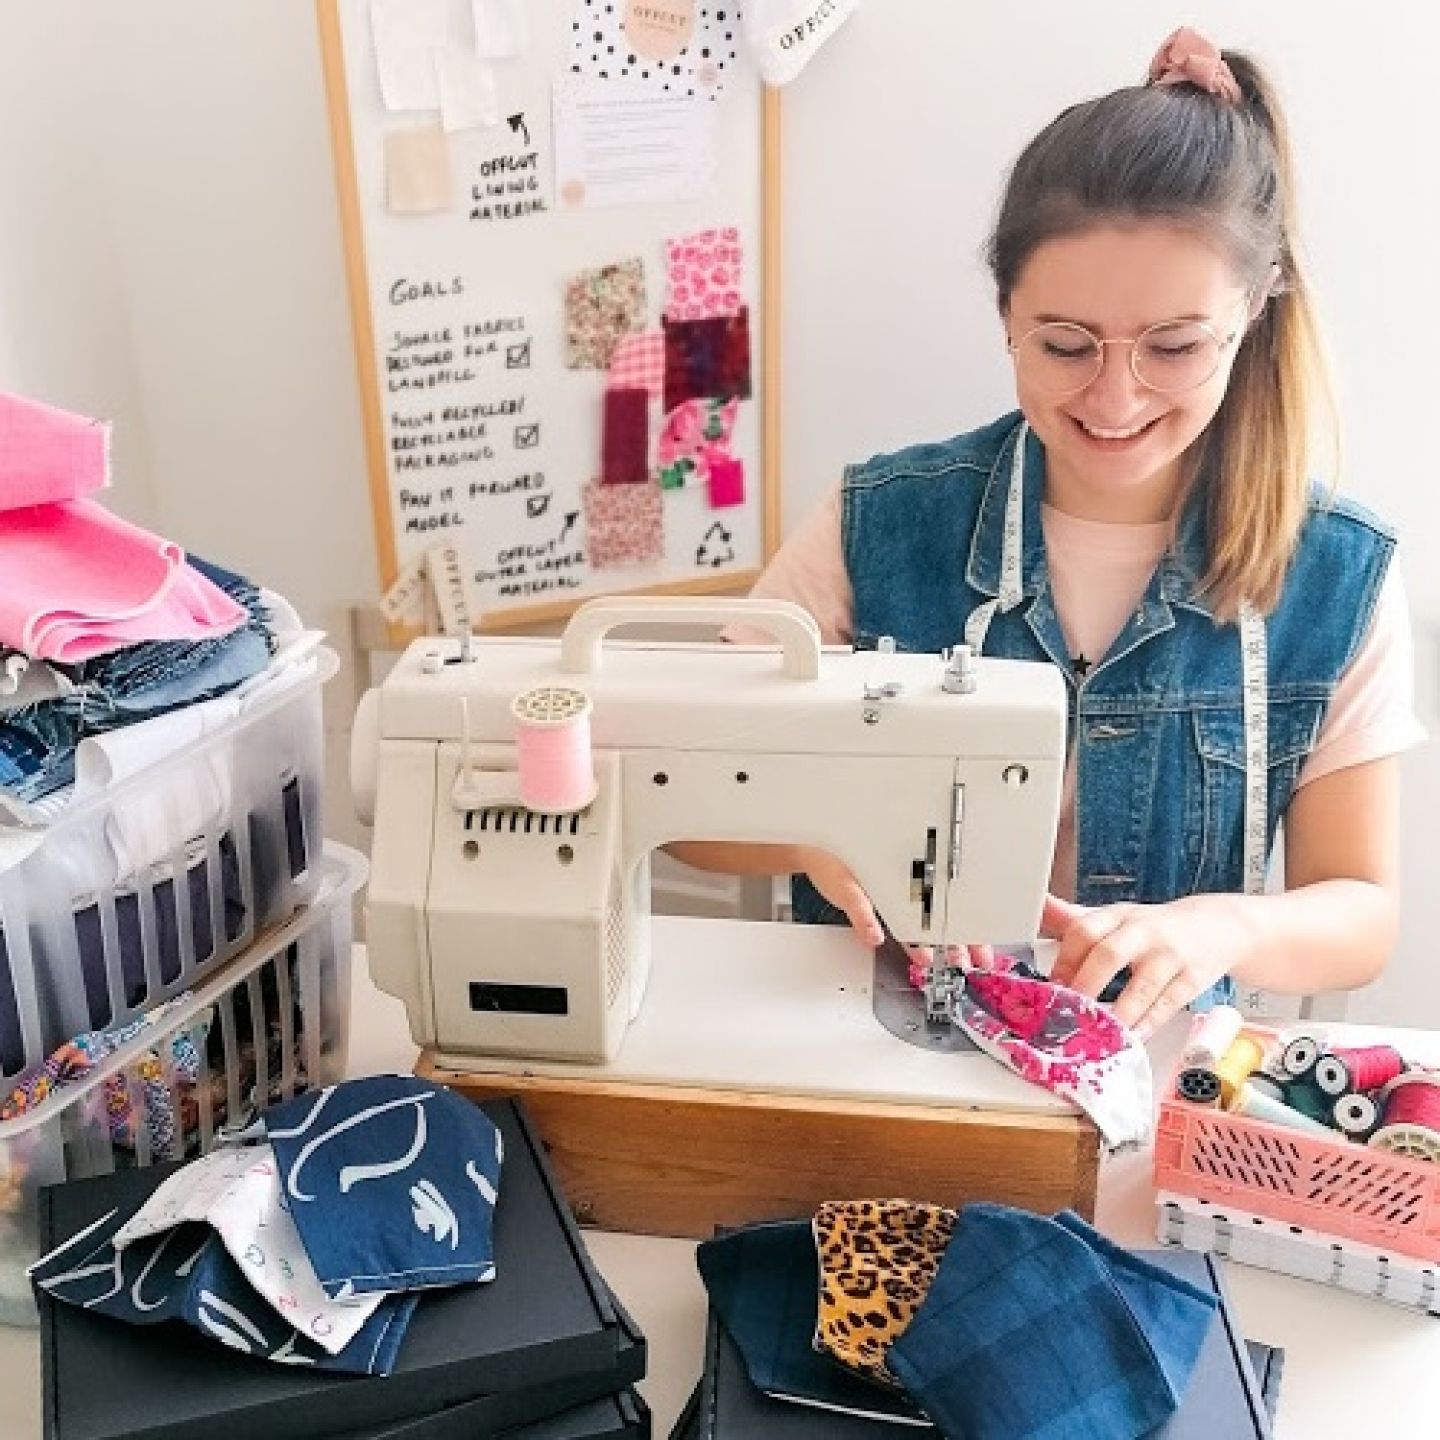 An image of GCU Graduate Georgia Barr smiling while using a sewing machine.